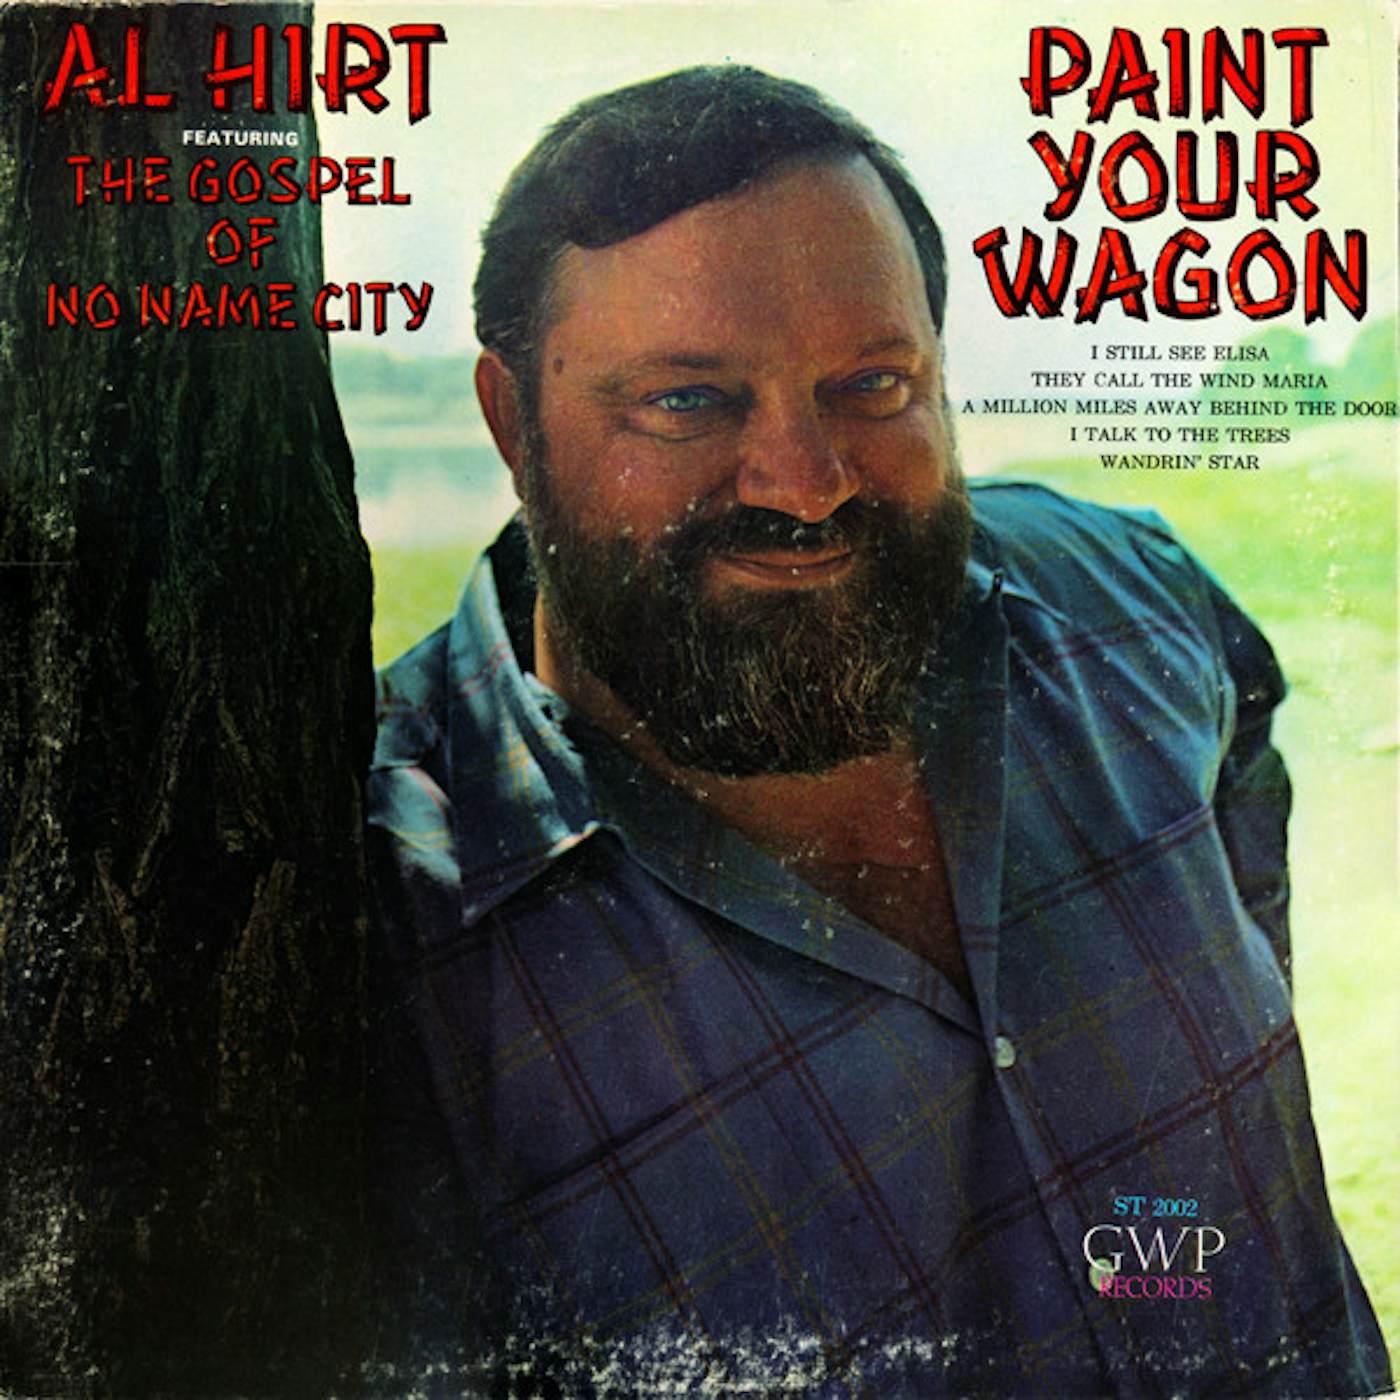 Al Hirt PAINT YOUR WAGON CD